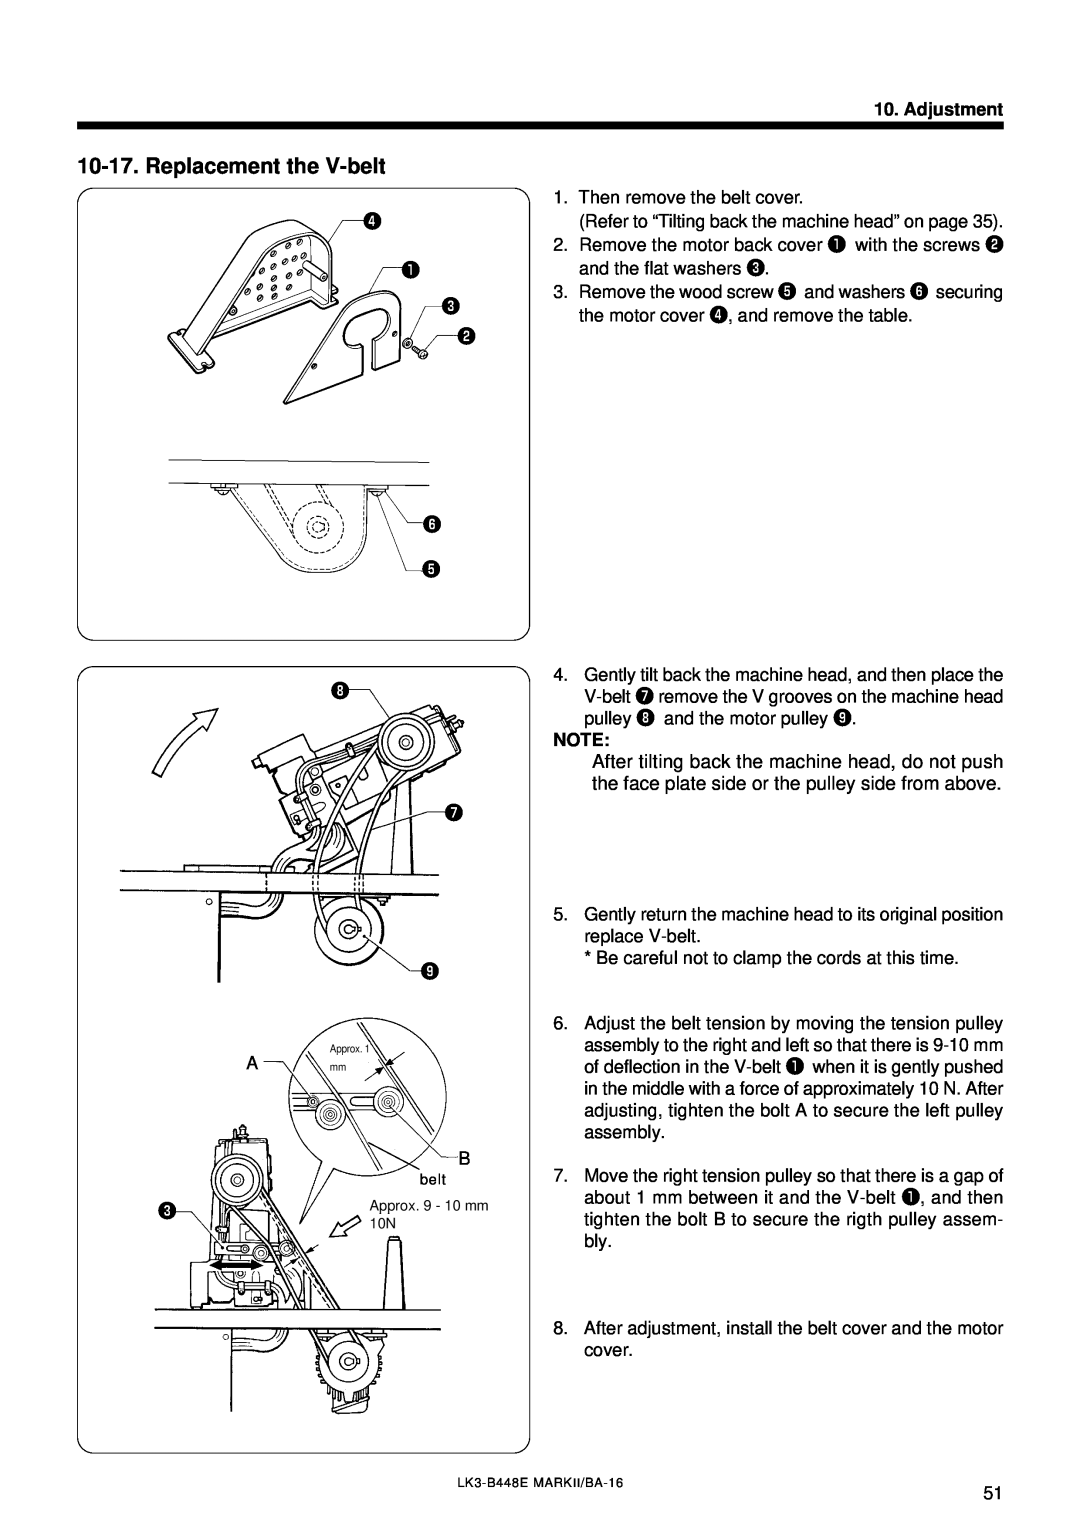 Brother LK3-B448E instruction manual Replacement the V-belt, Adjustment 